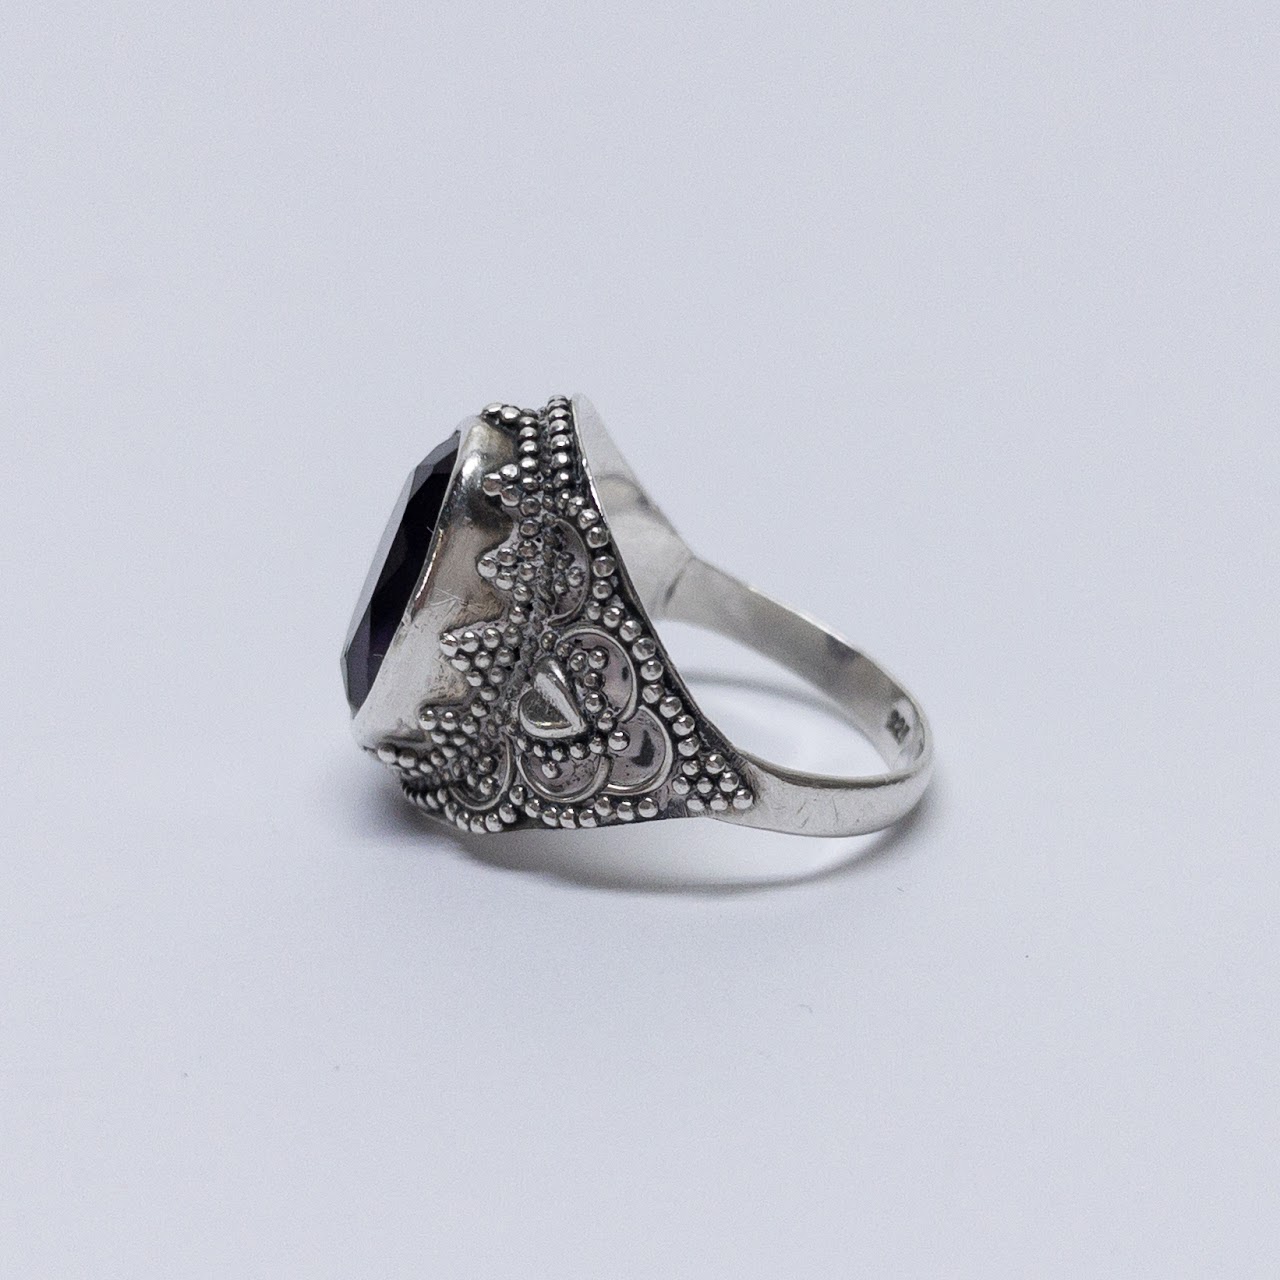 Sterling Silver & Amethyst Ring